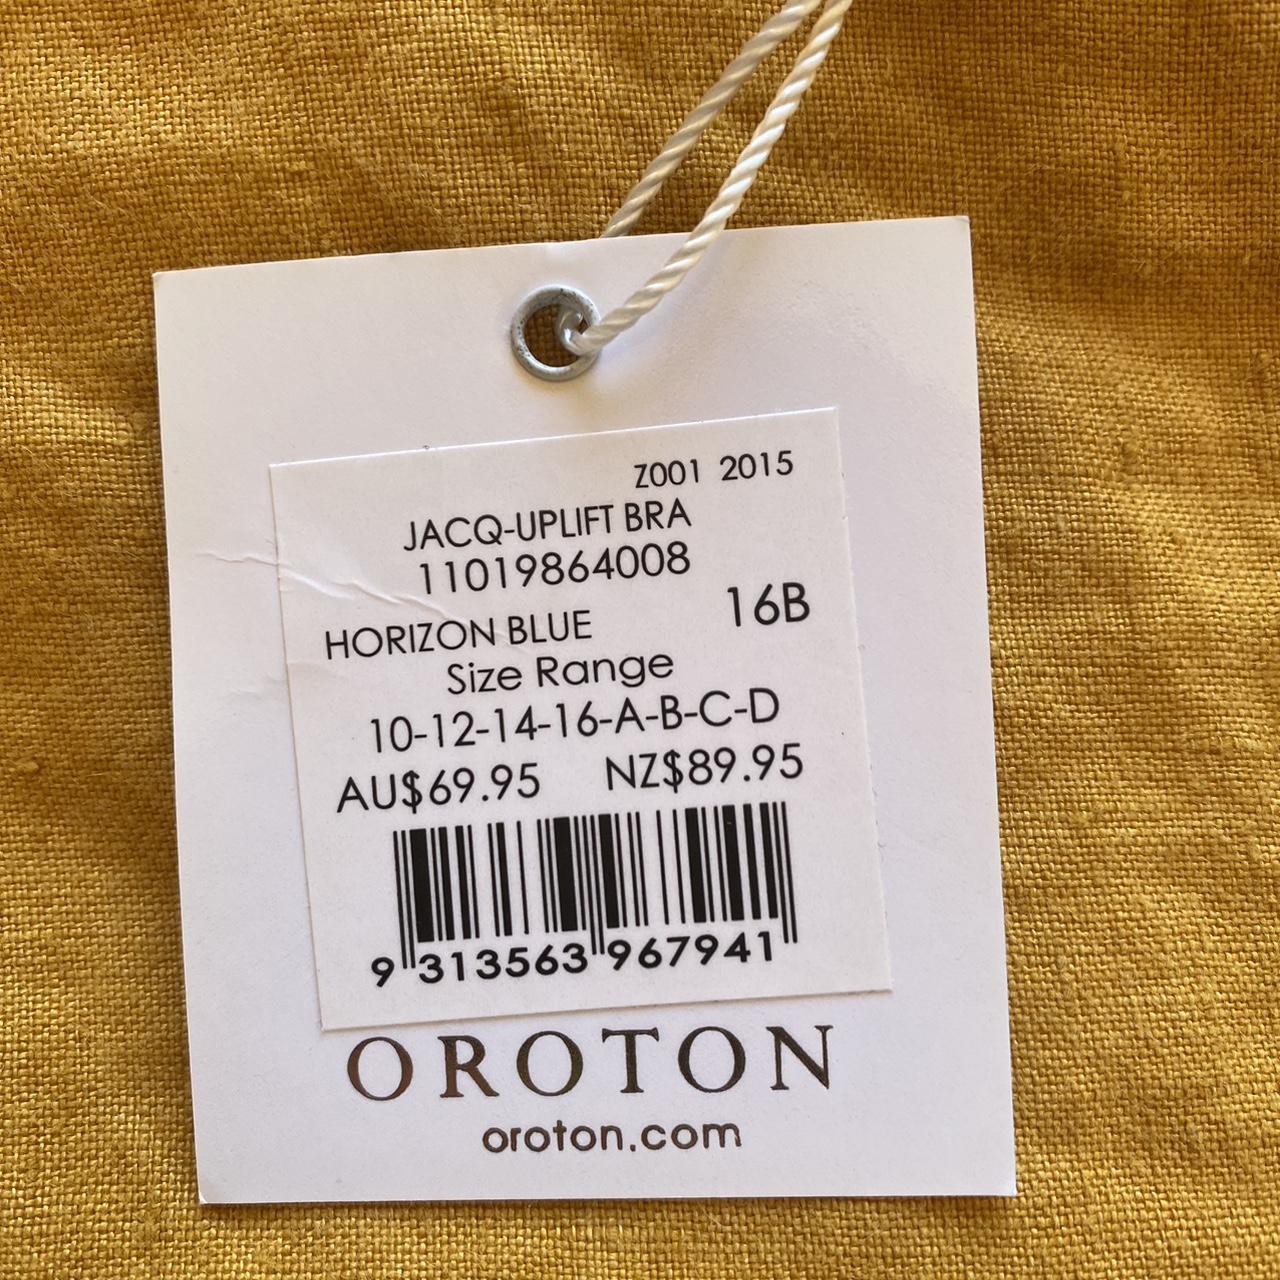 BNWT bra from Oroton, size 16B, RRP $69.95. Last - Depop